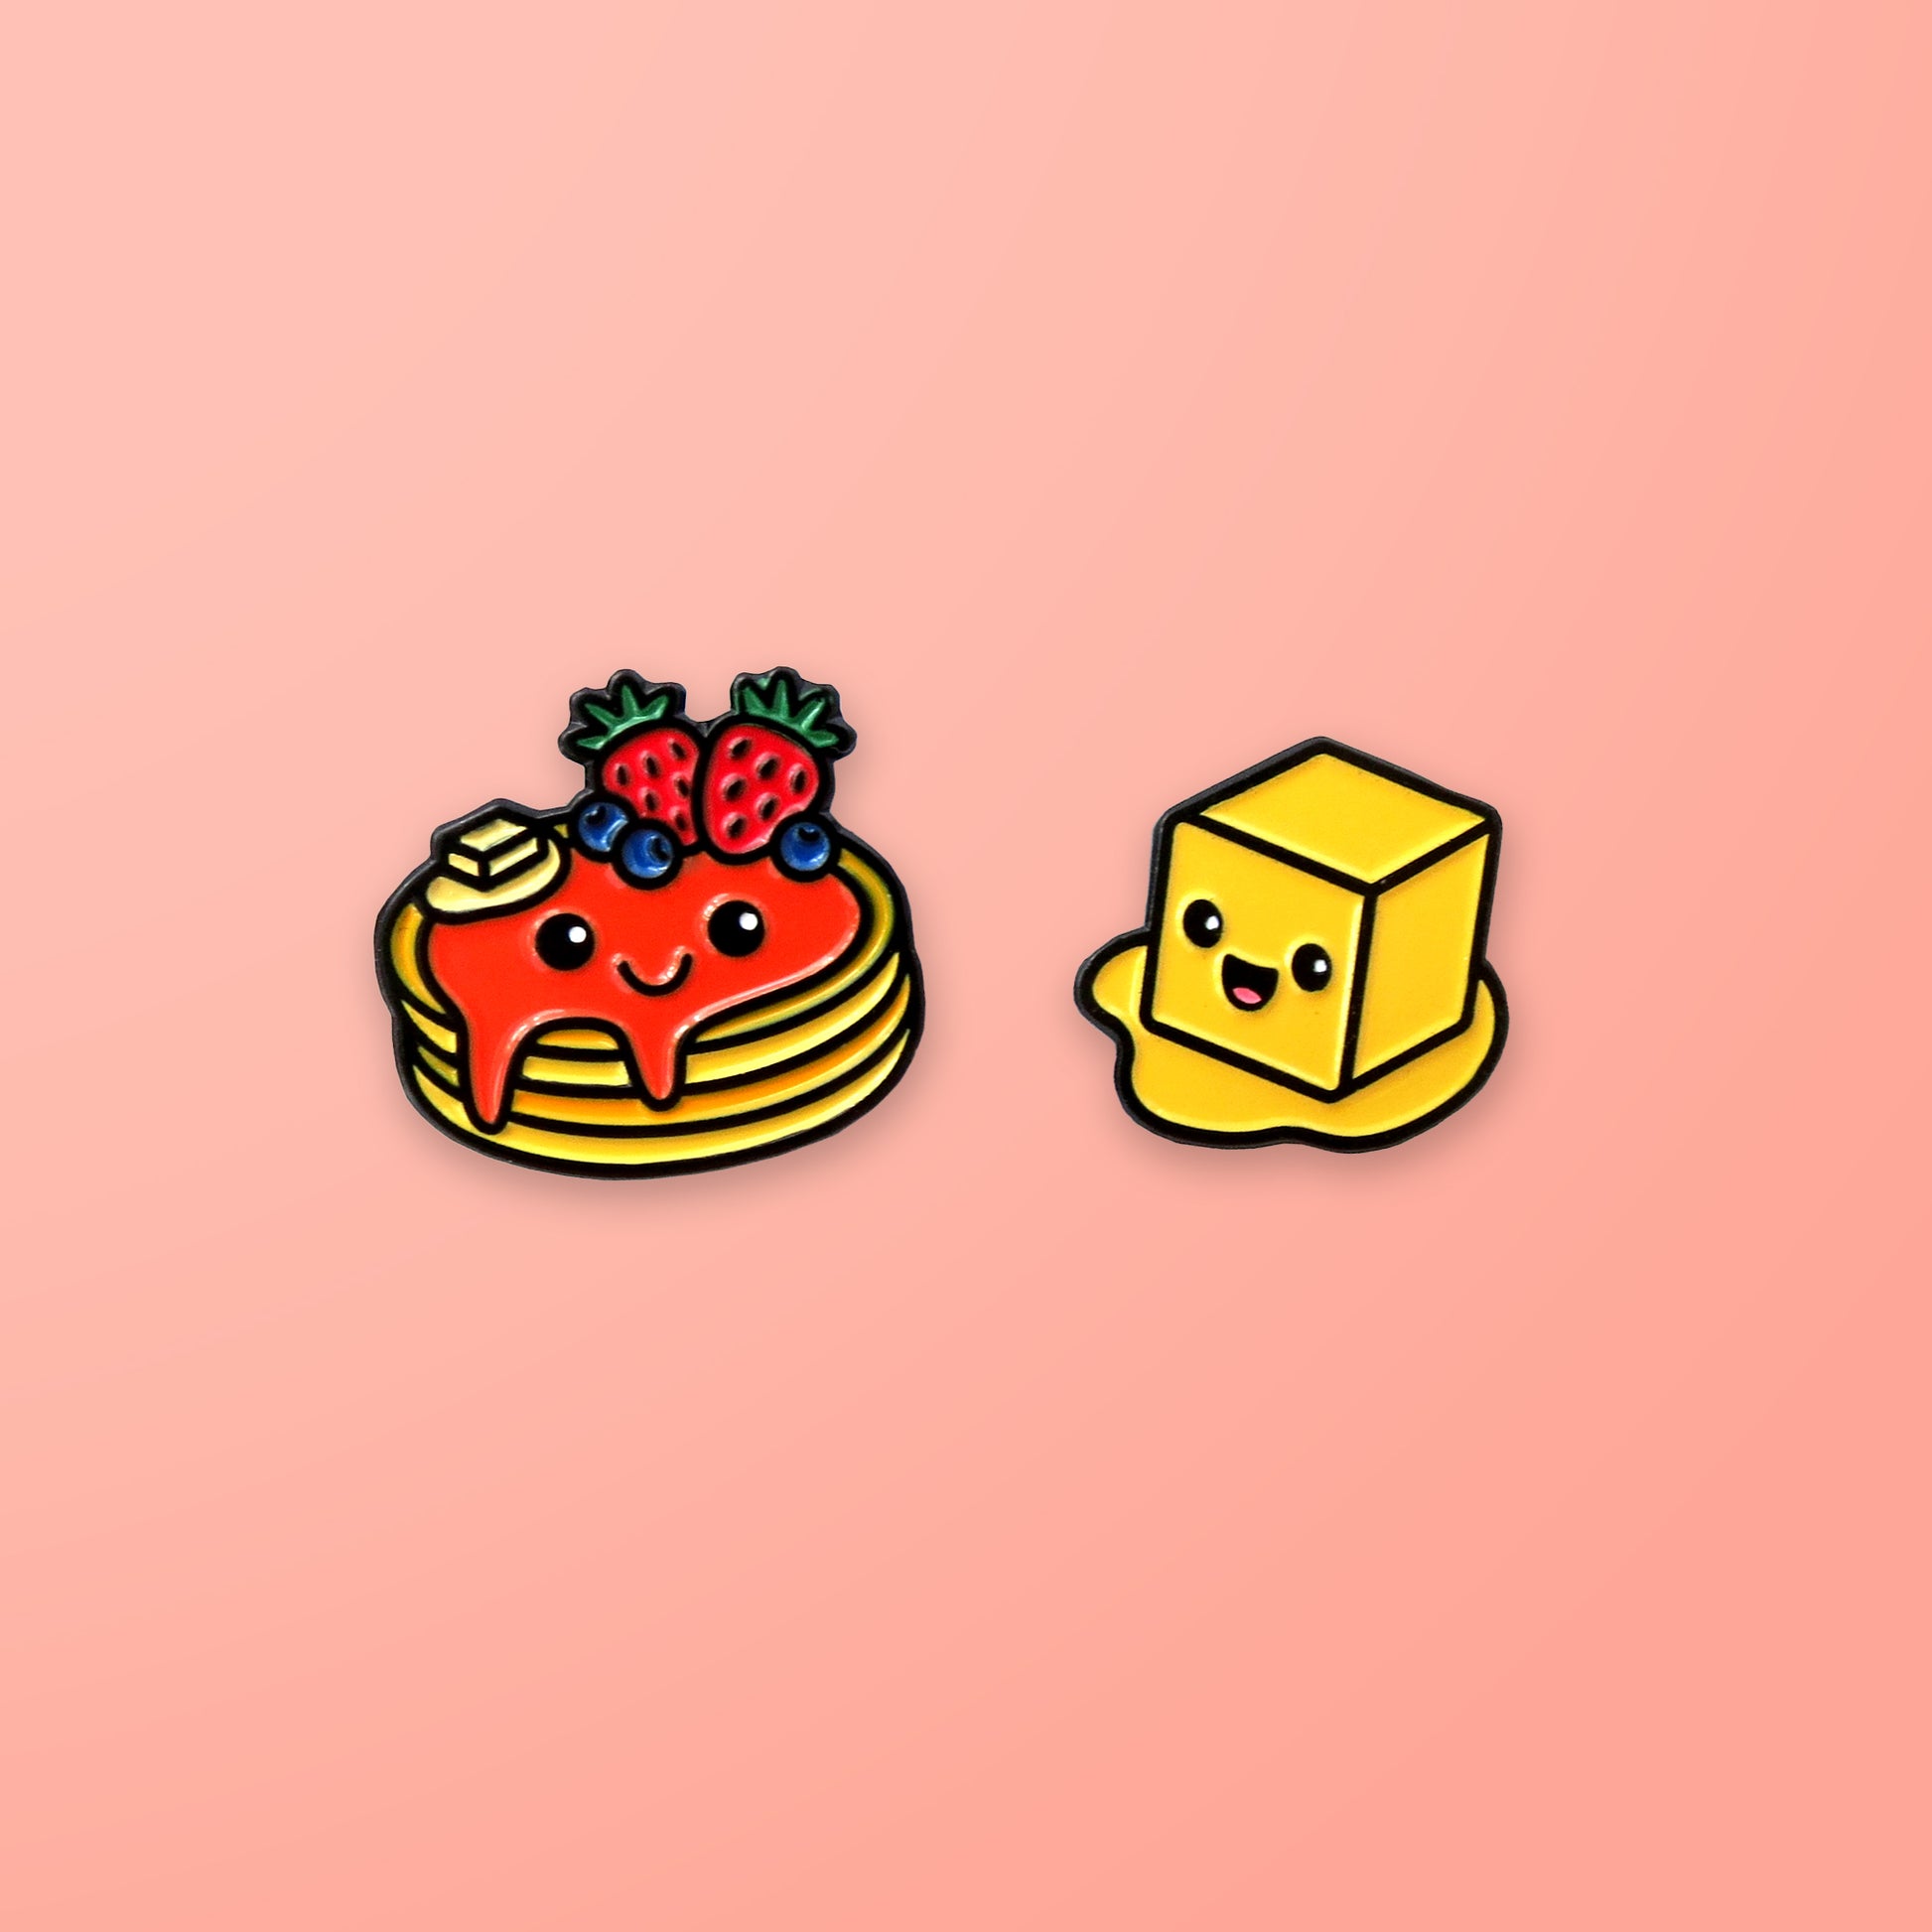 Pancake and Butter enamel pin set on pink background